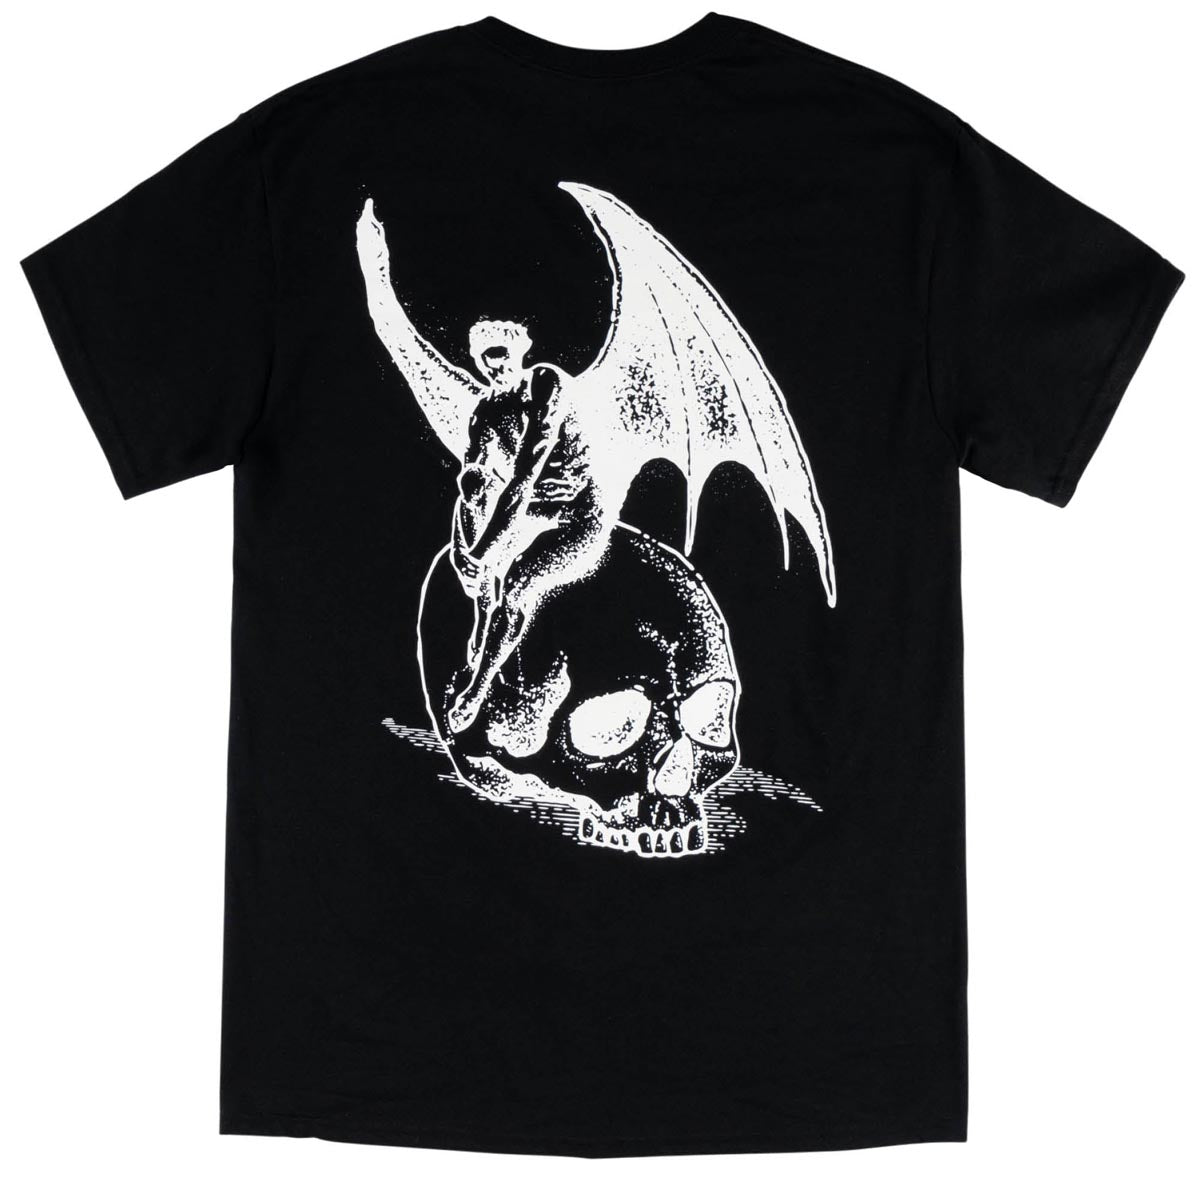 Welcome Nephilim T-Shirt - Black/White image 1